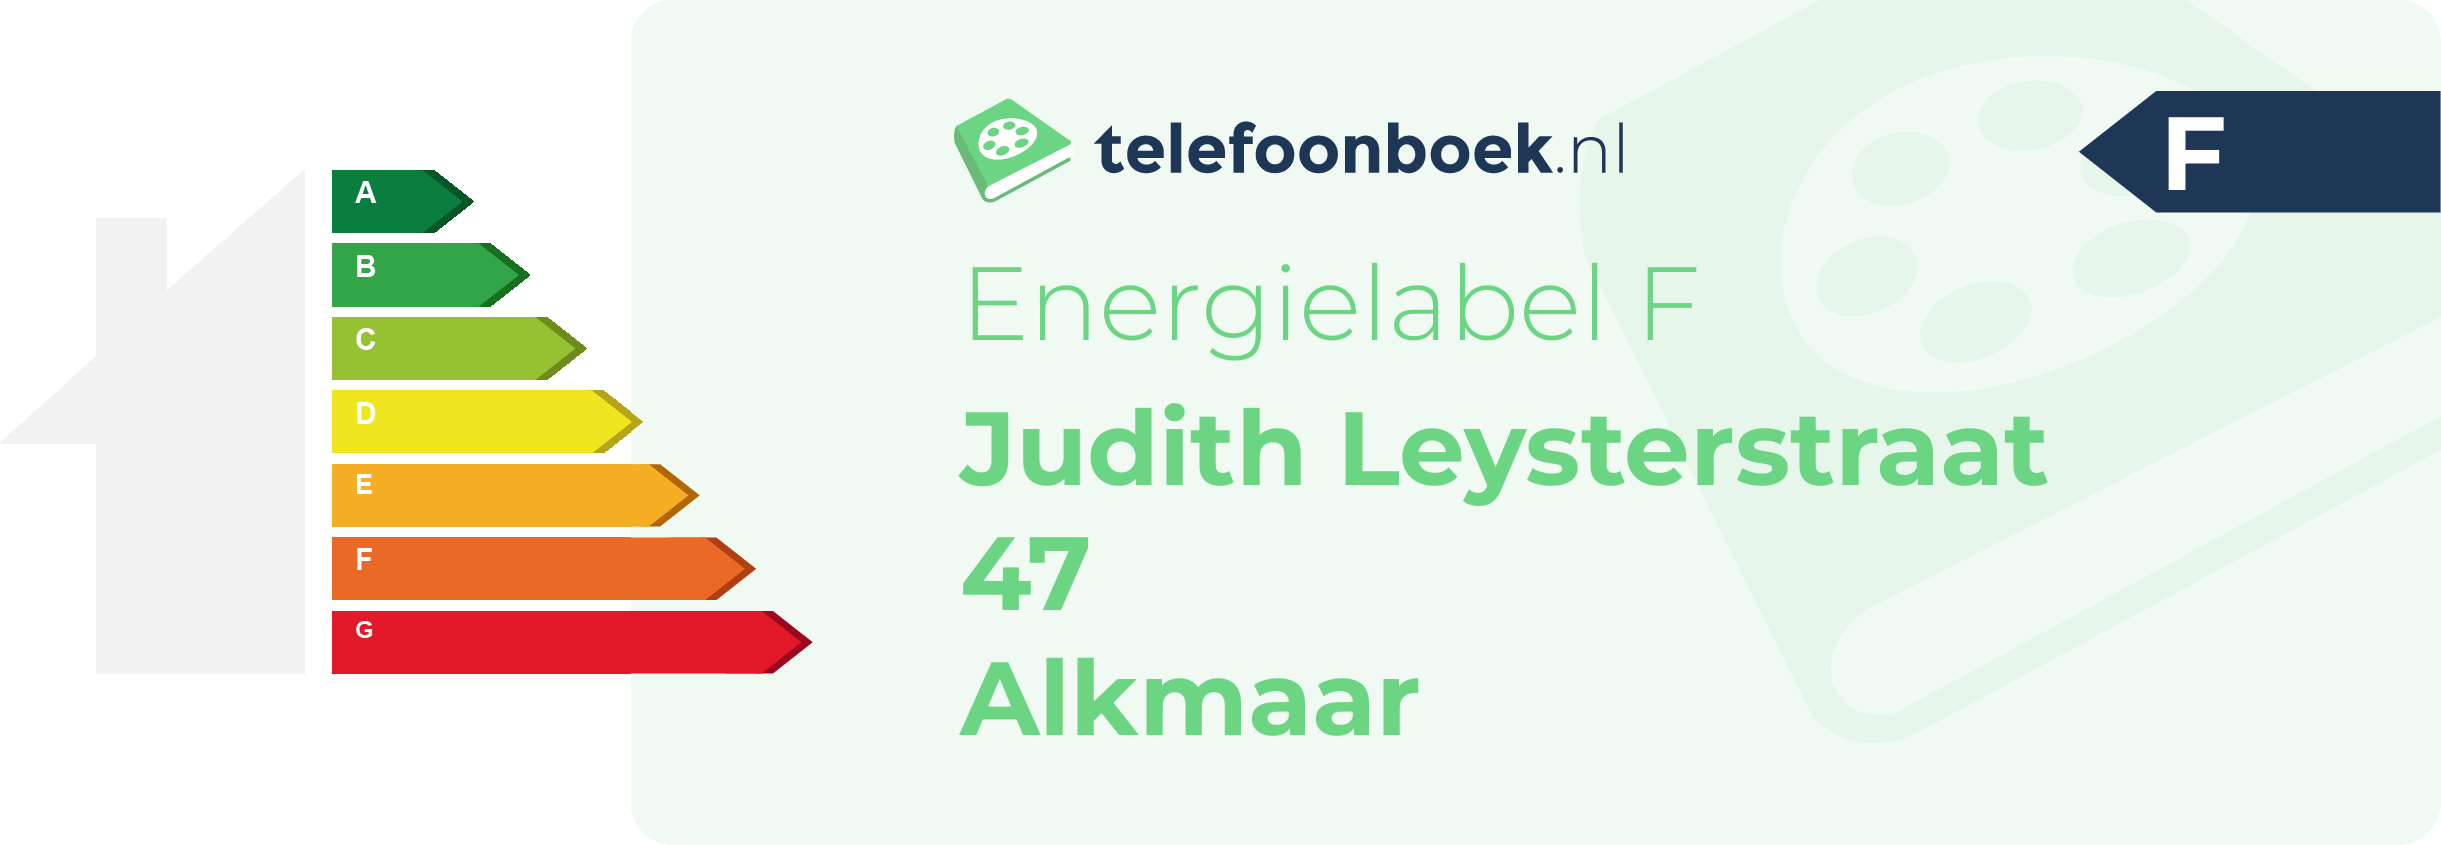 Energielabel Judith Leysterstraat 47 Alkmaar